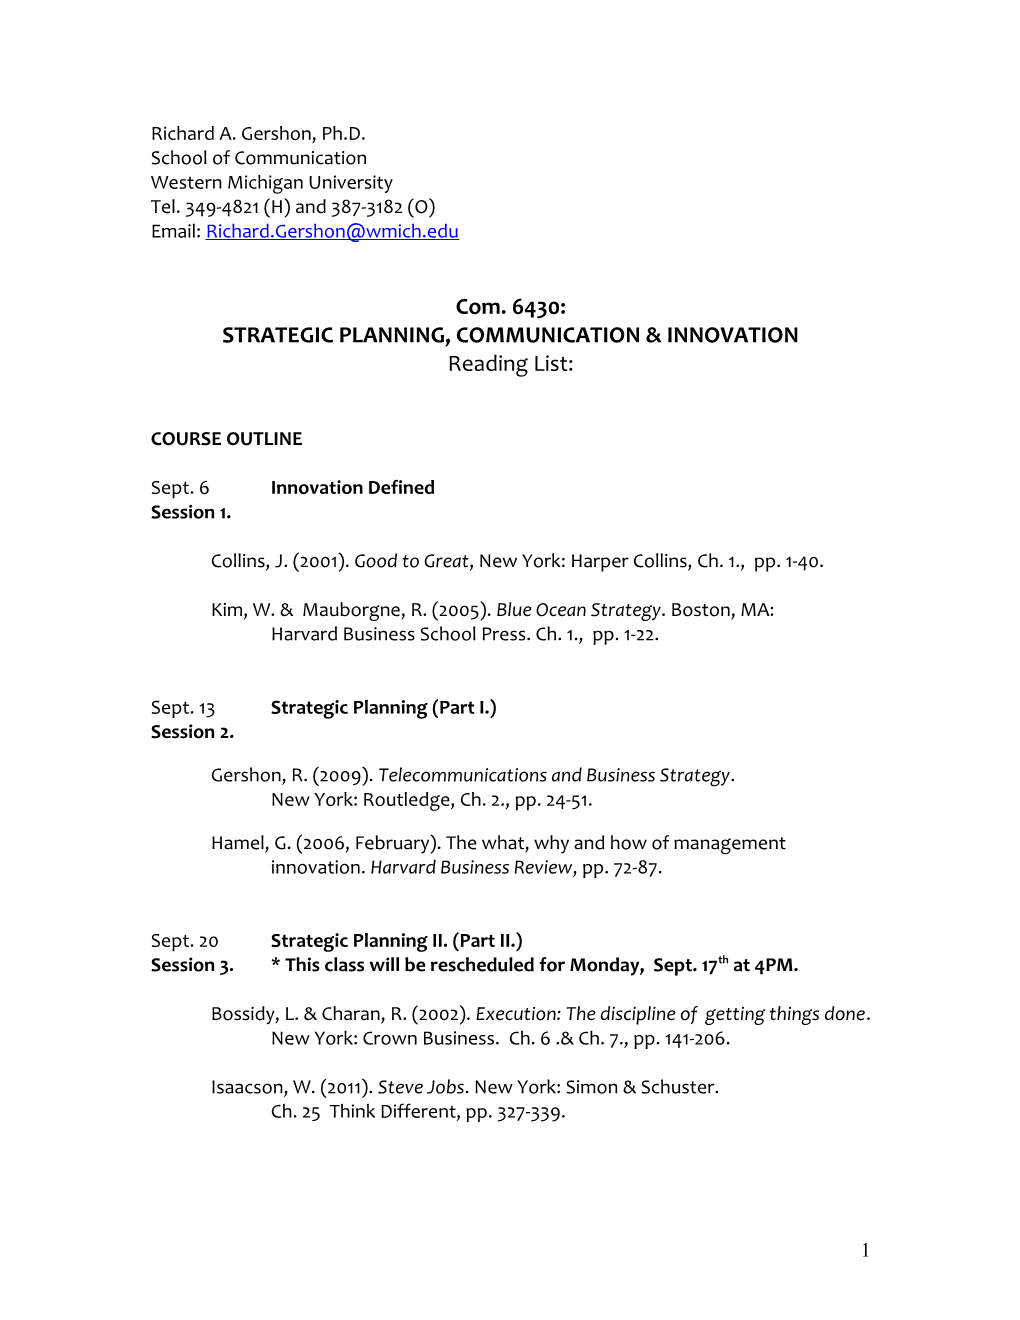 Strategic Planning, Communication & Innovation